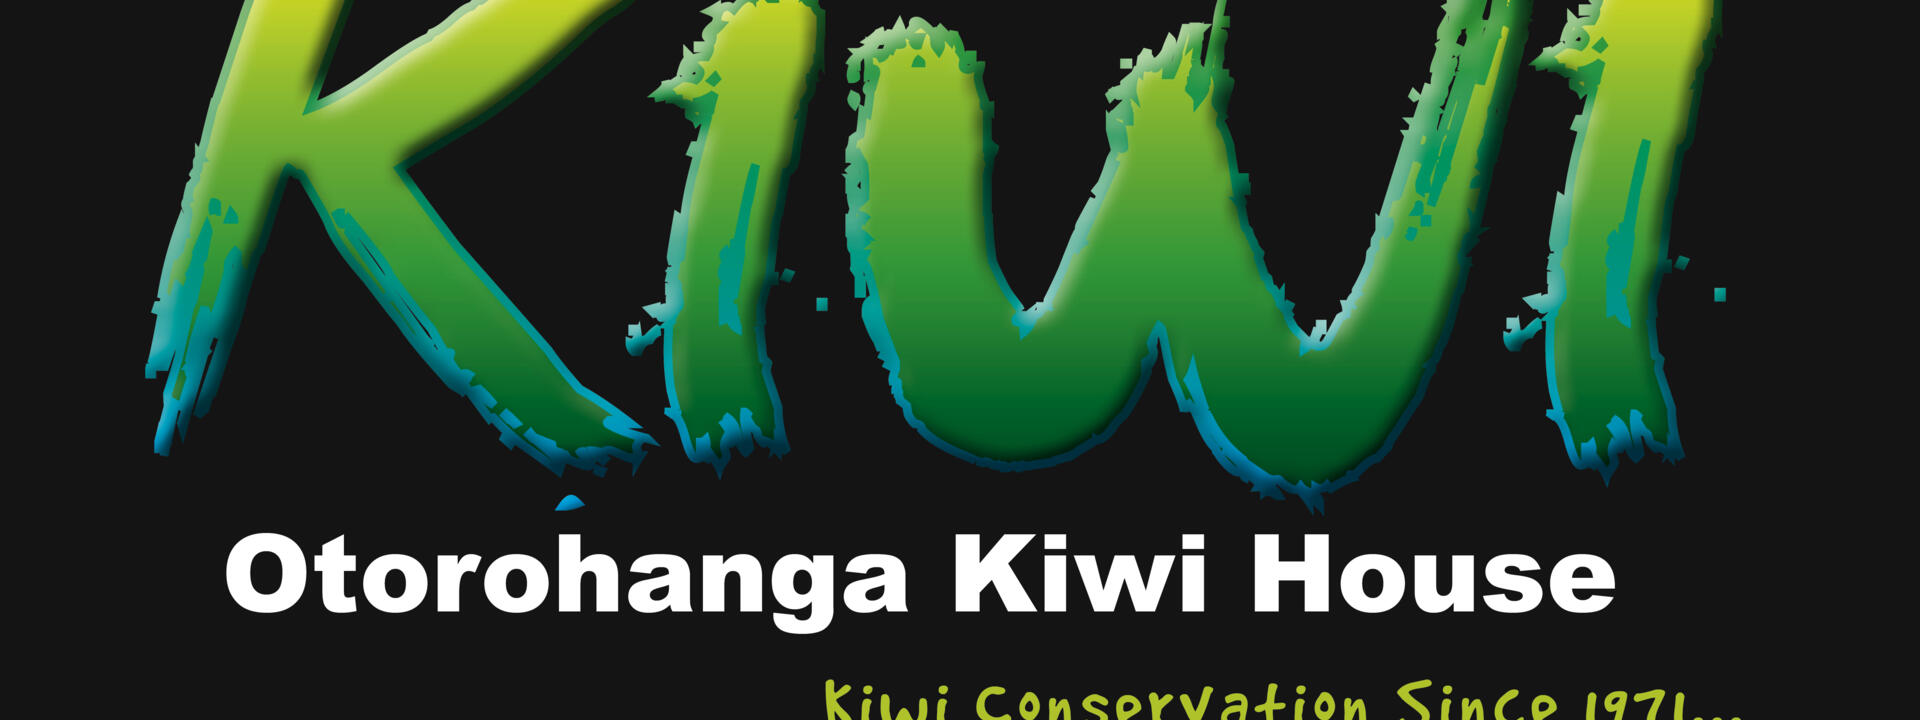 kiwi-conserv-1971-black_0.jpg